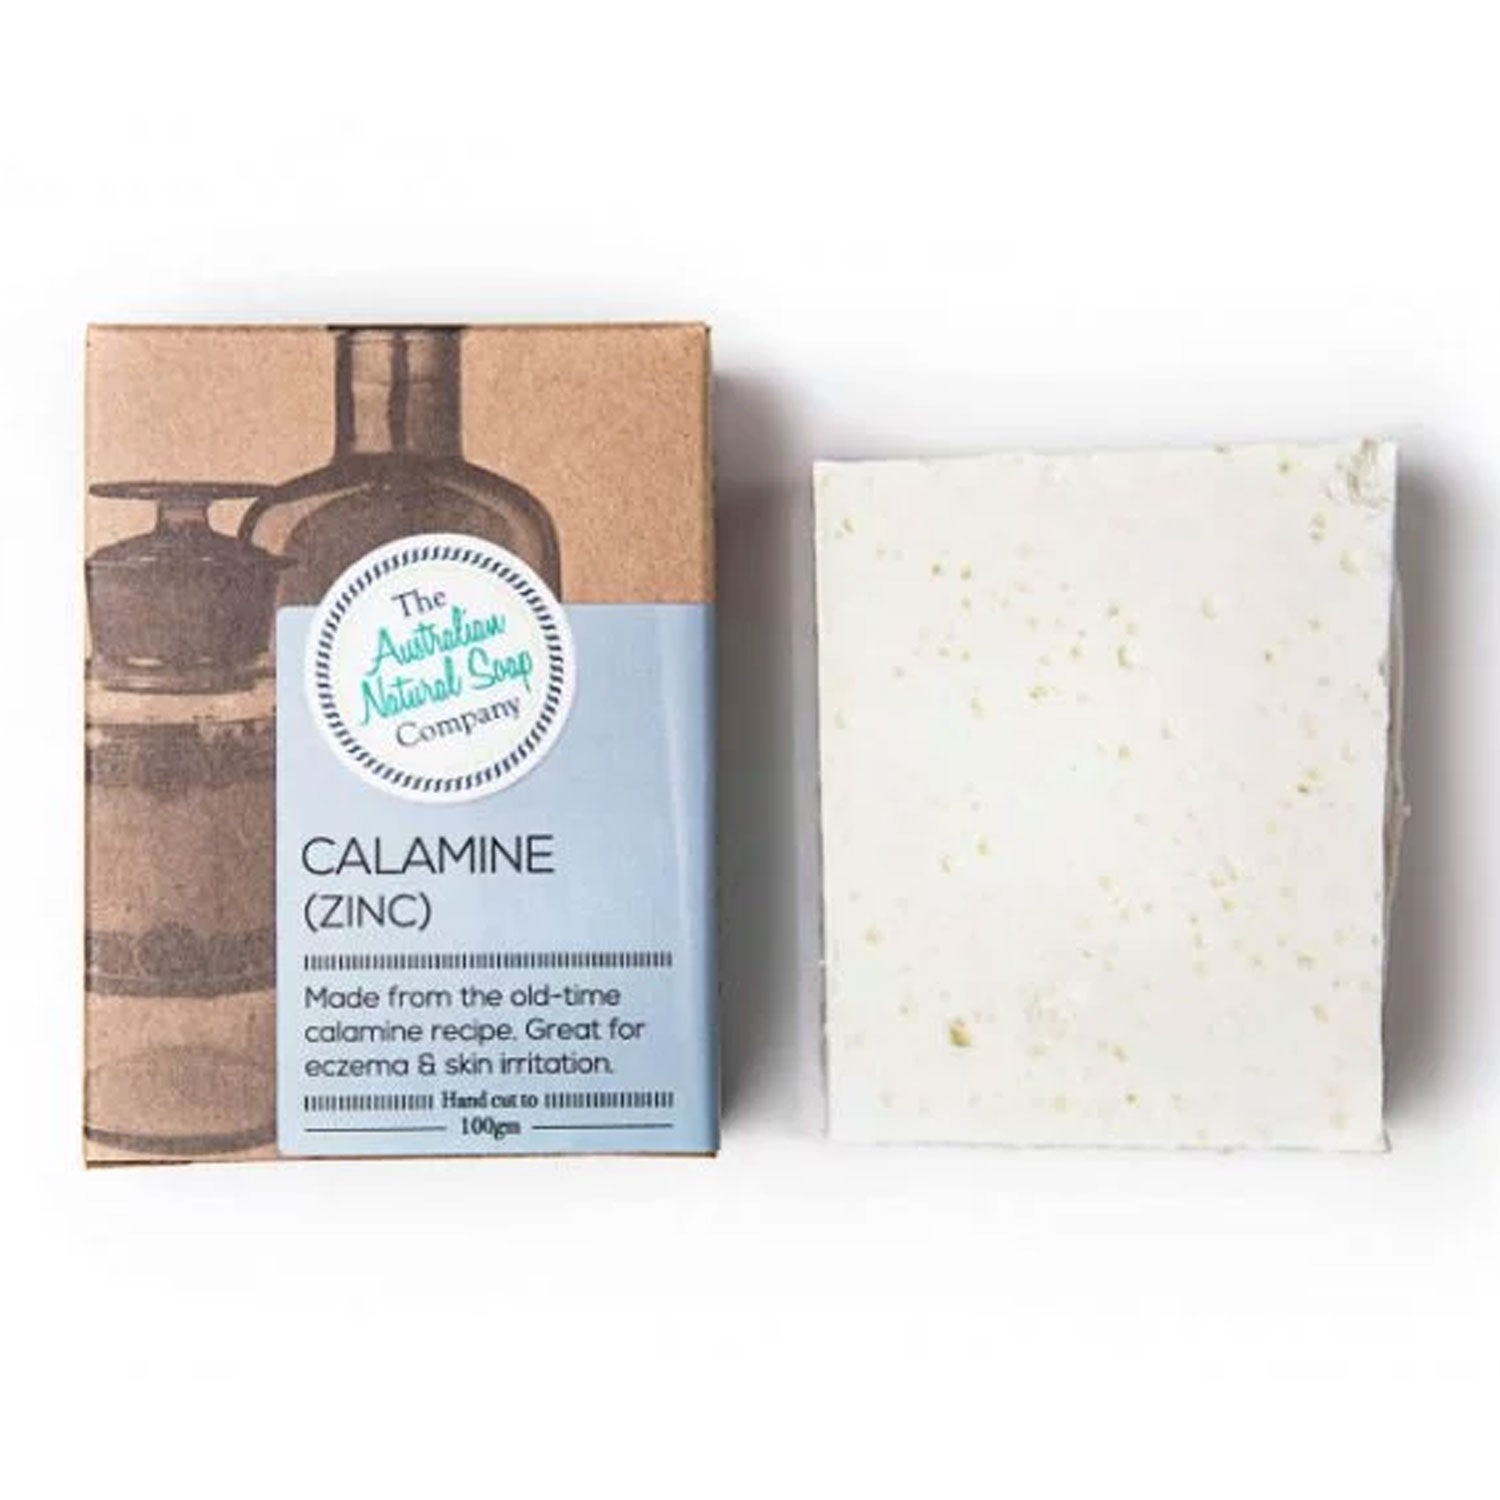 Australian Natural Soap Co Calamine (Zinc) Soap 100g - Orcadia